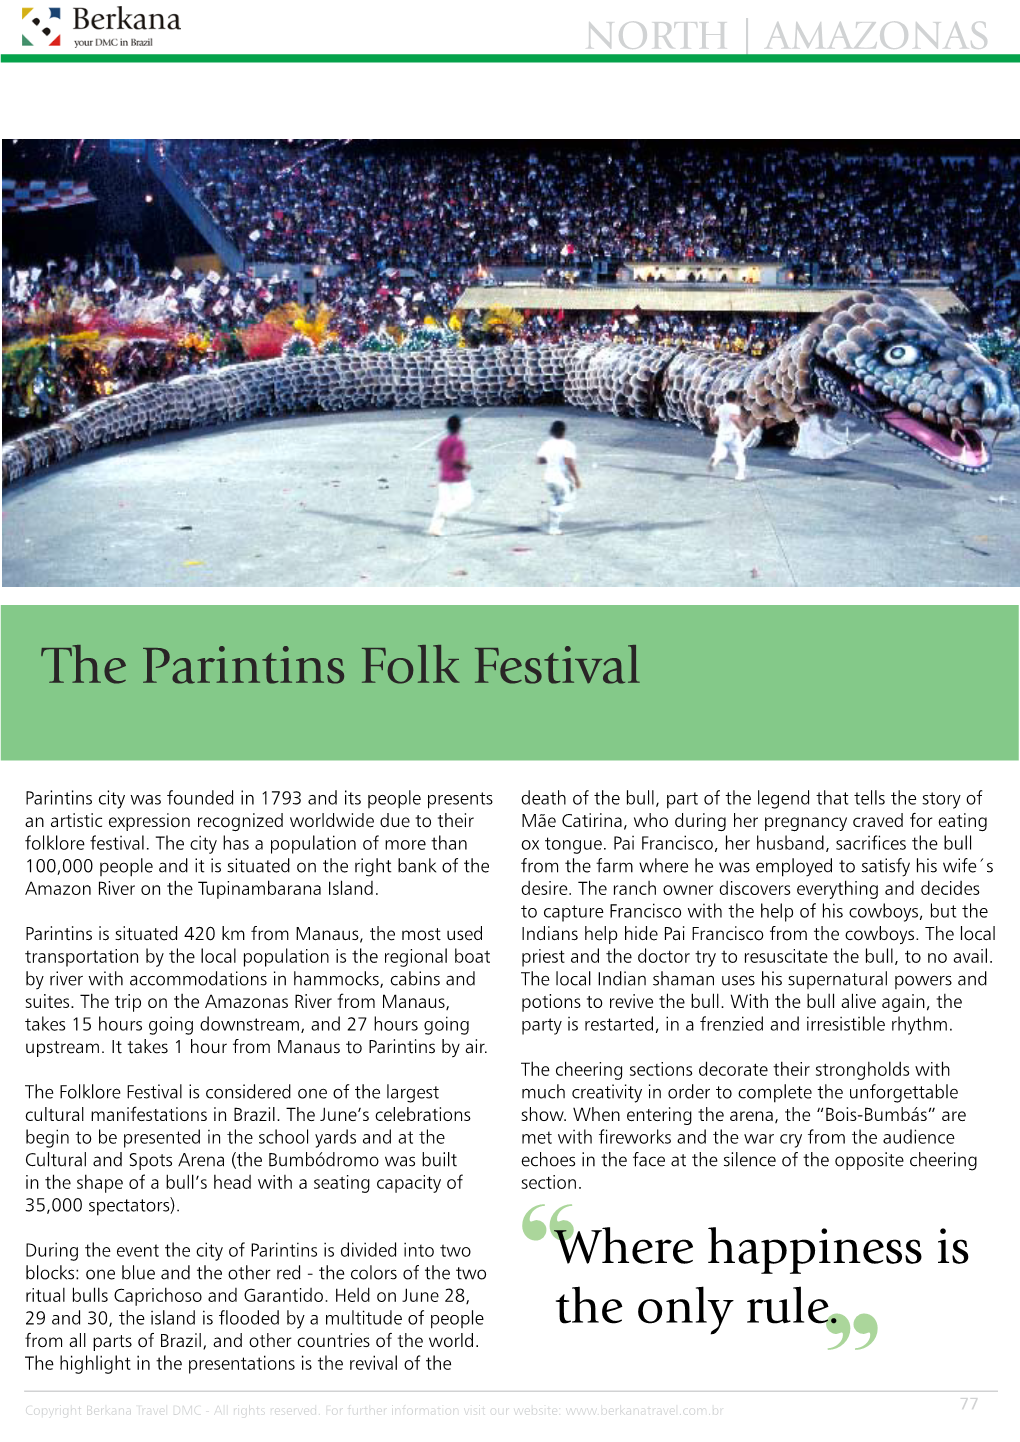 The Parintins Folk Festival